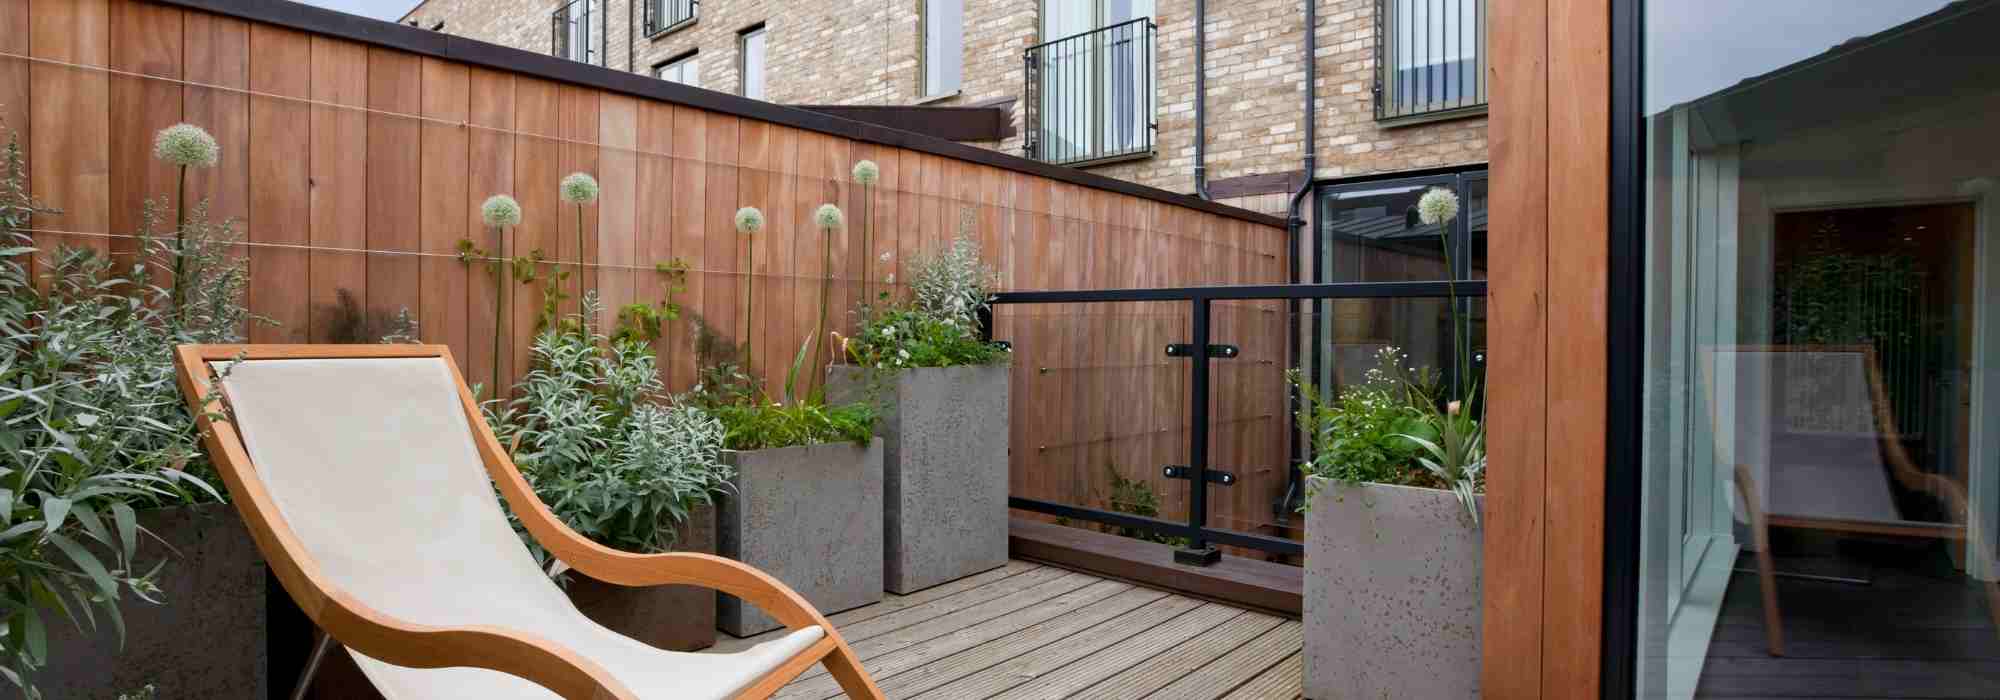 Quelles plantes pour un balcon contemporain ?